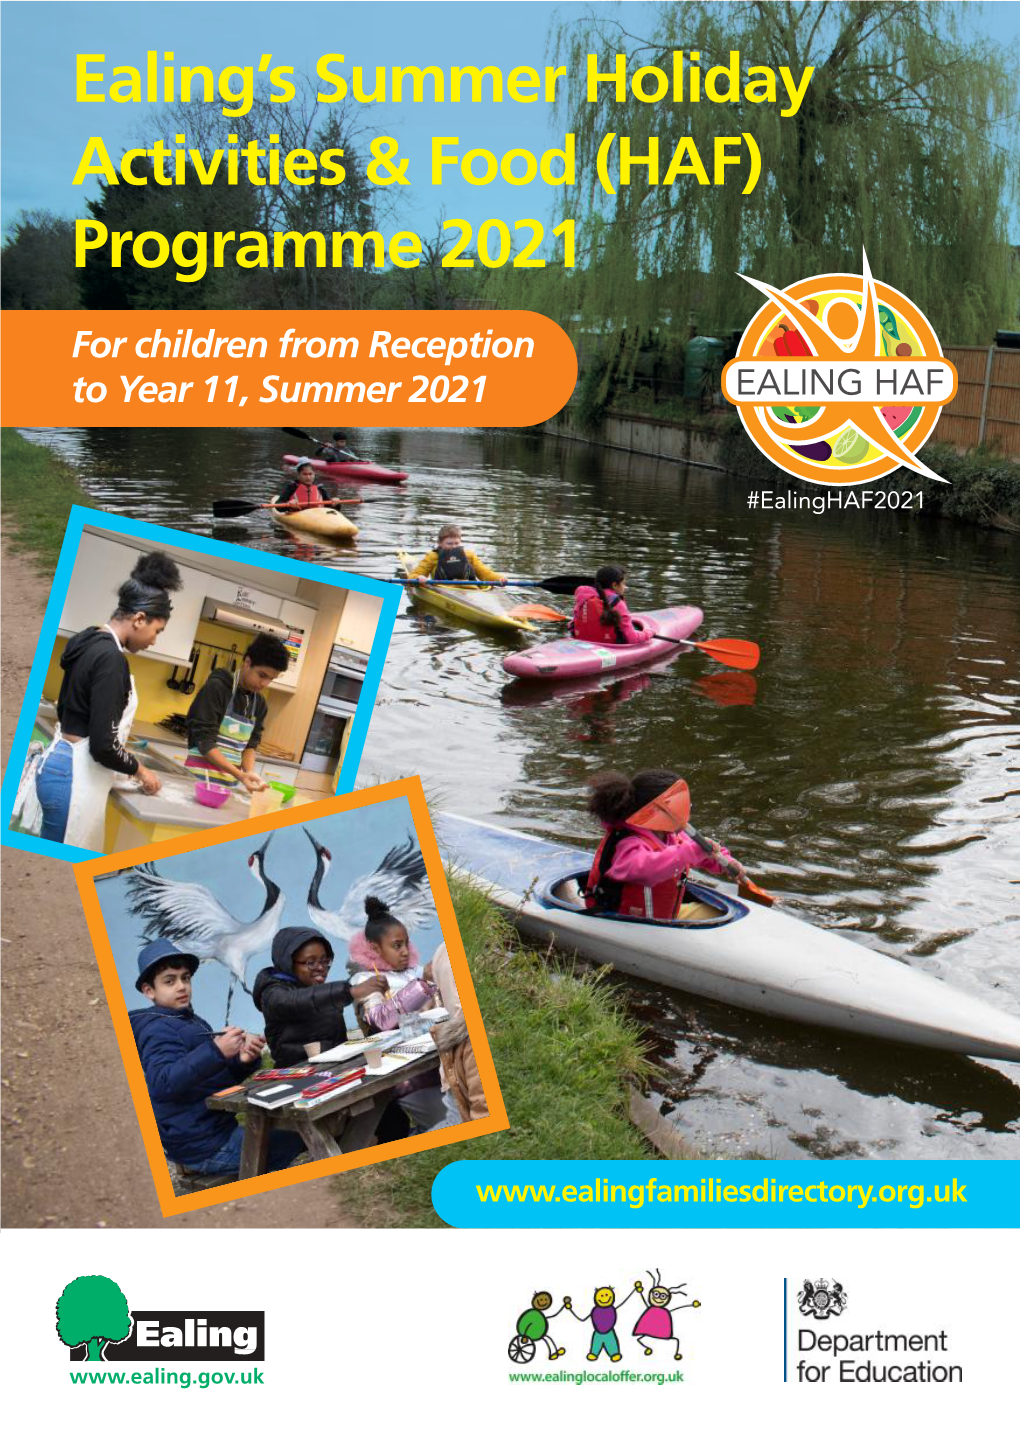 Ealing's Summer Holiday Activities & Food (HAF) Programme 2021